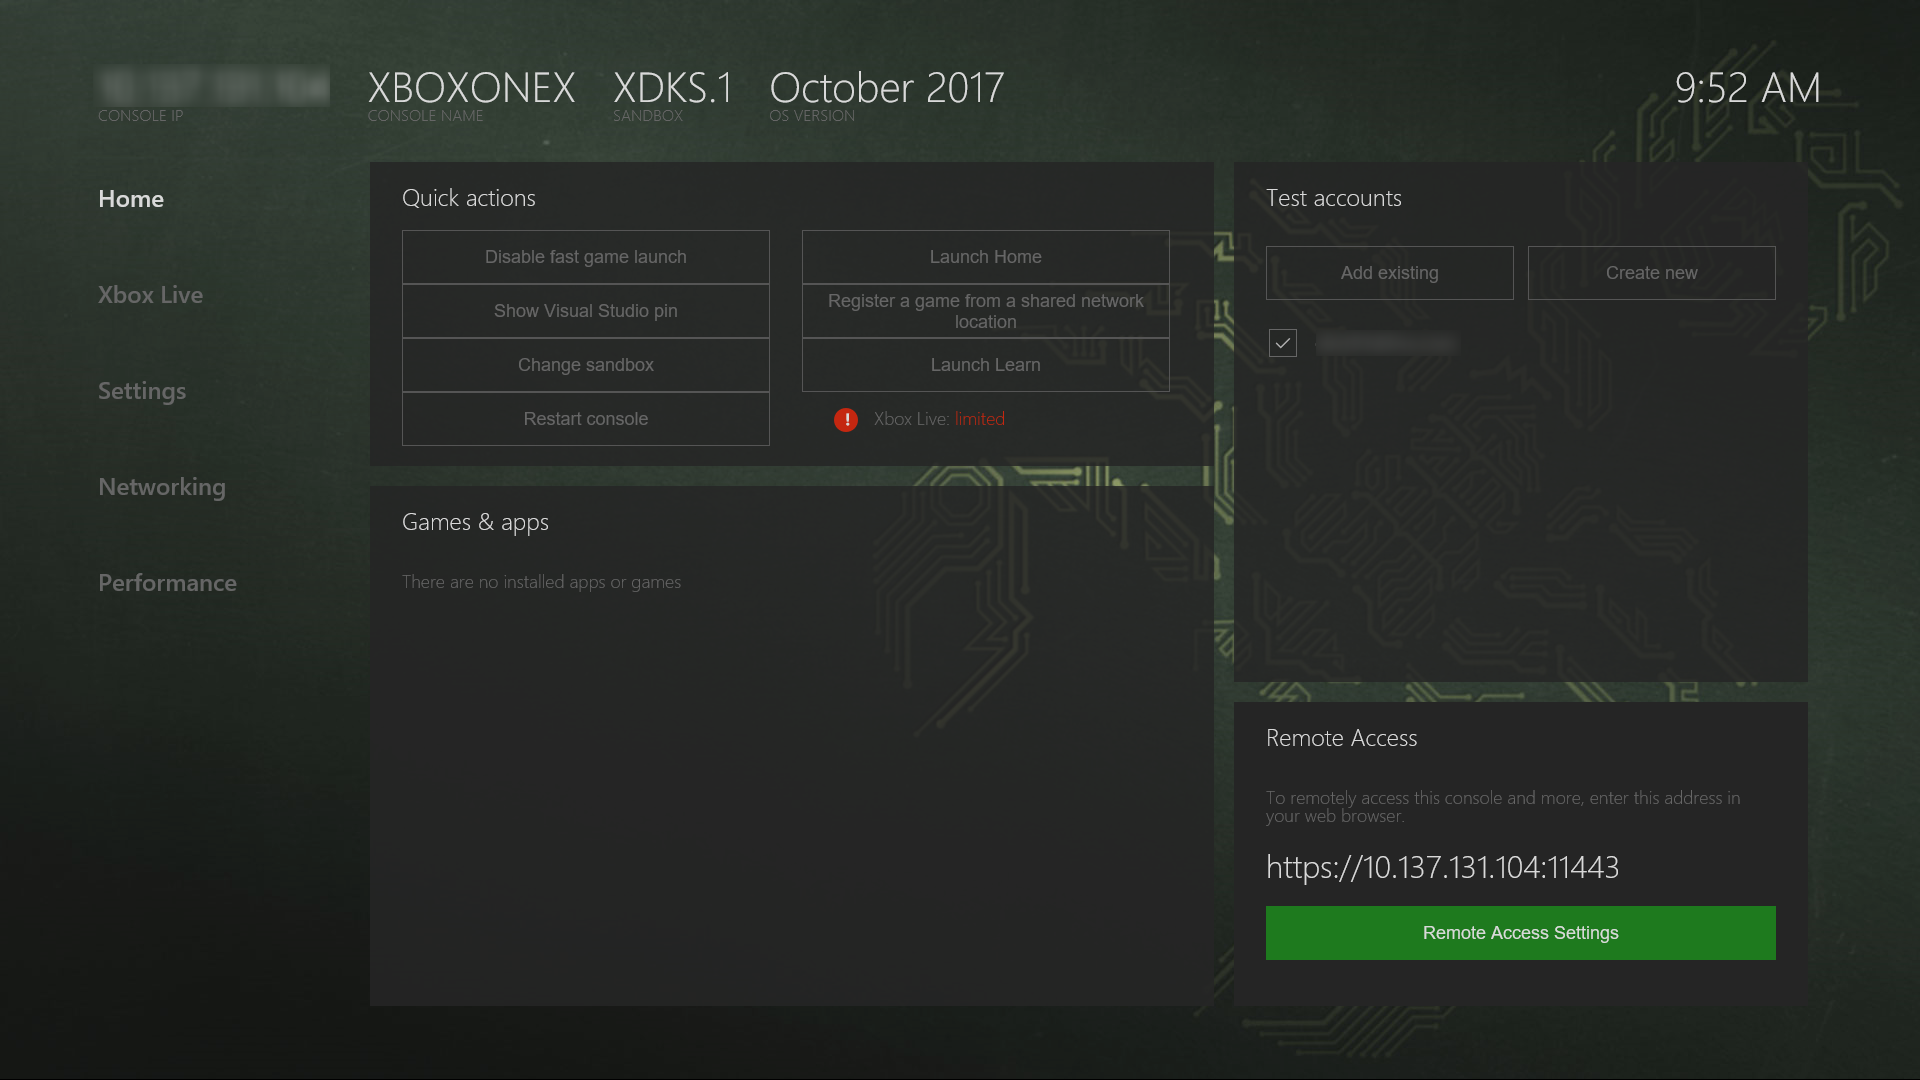 Xbox One ツールの概要 - UWP applications | Microsoft Learn